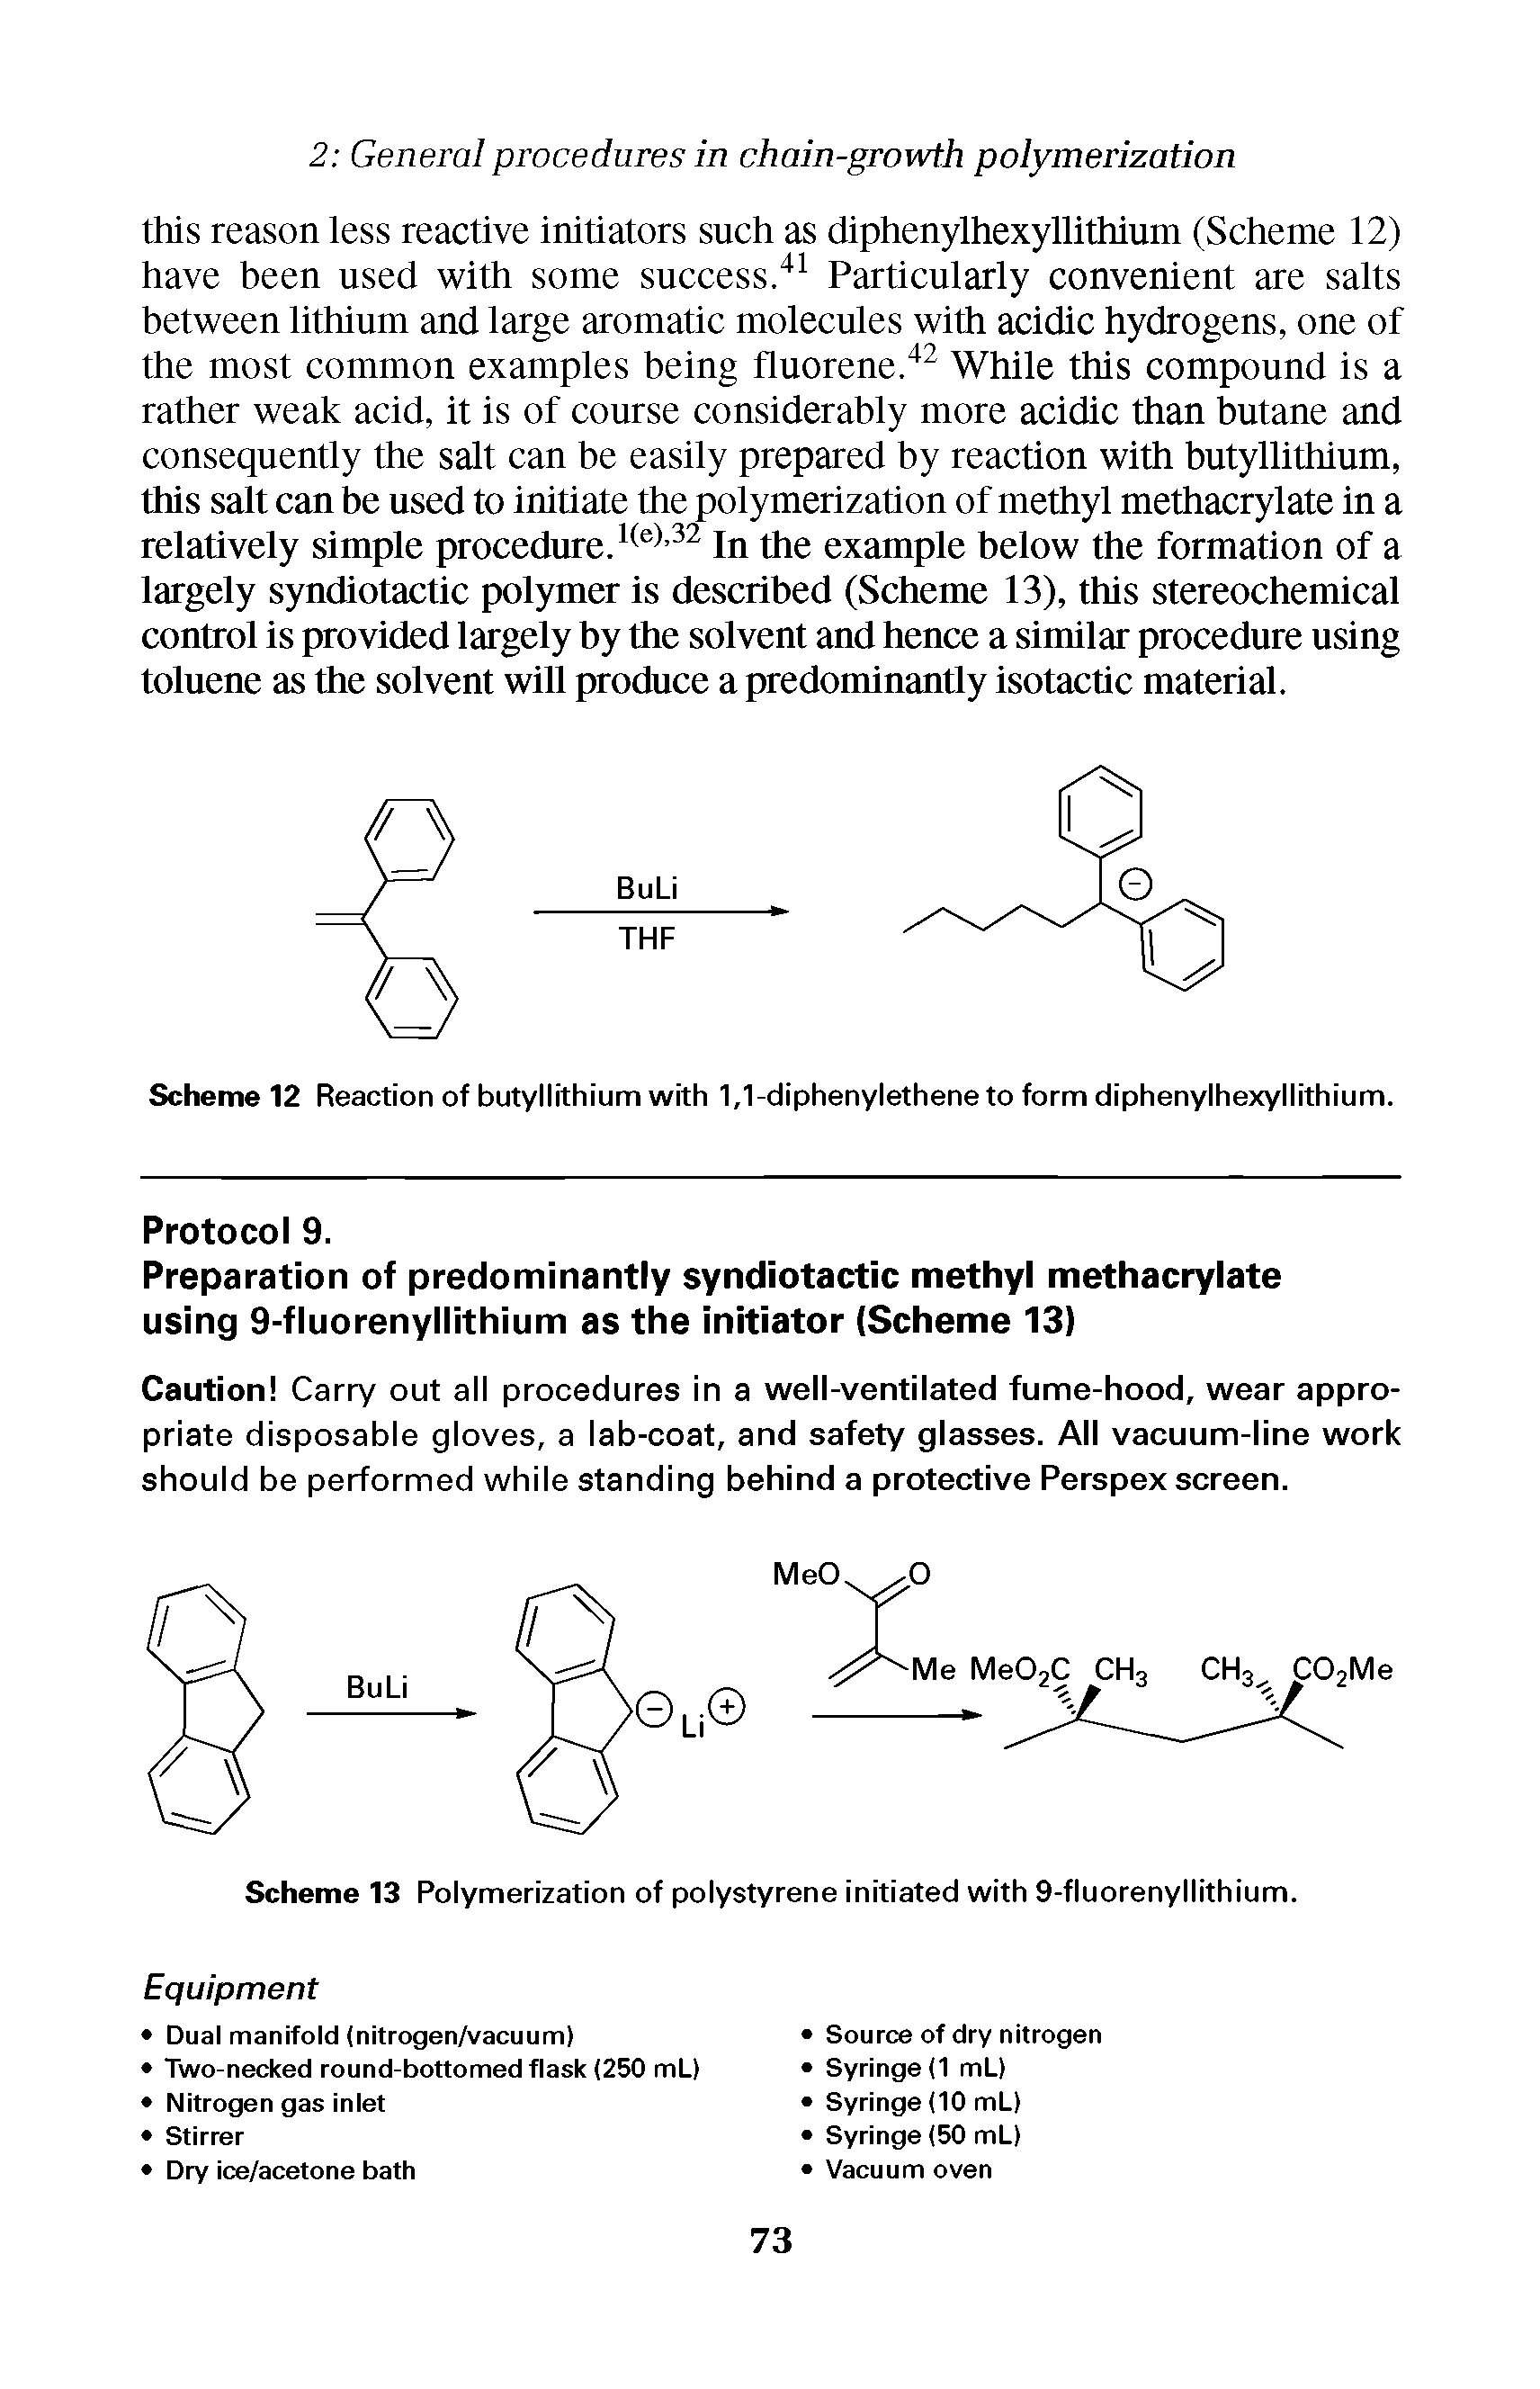 Scheme 13 Polymerization of polystyrene initiated with 9-fluorenyllithium.